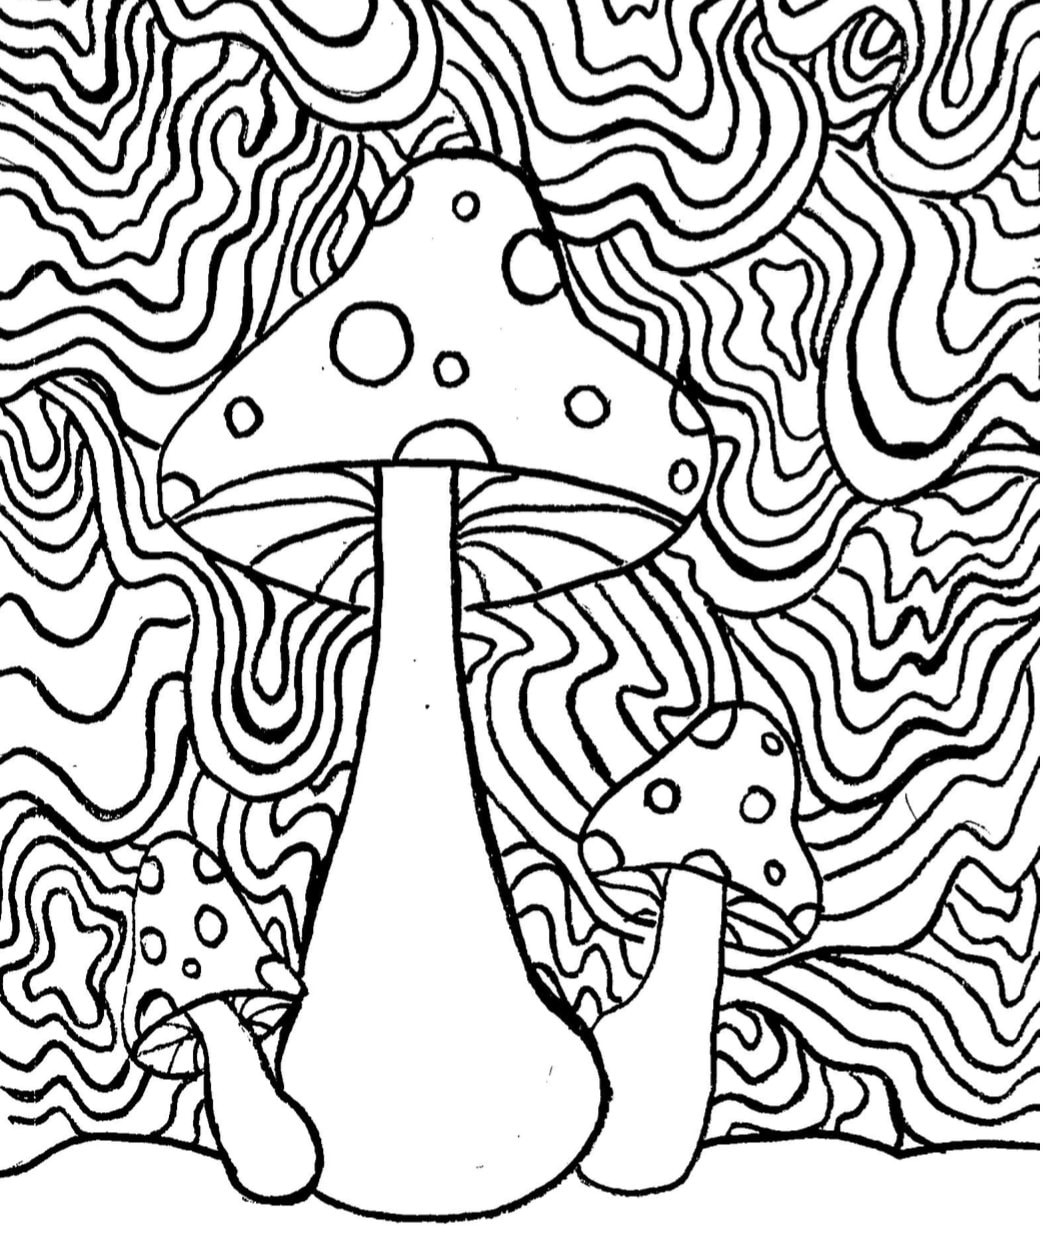 Trippy coloring book page shrooms psychedelic psilocybin | Etsy